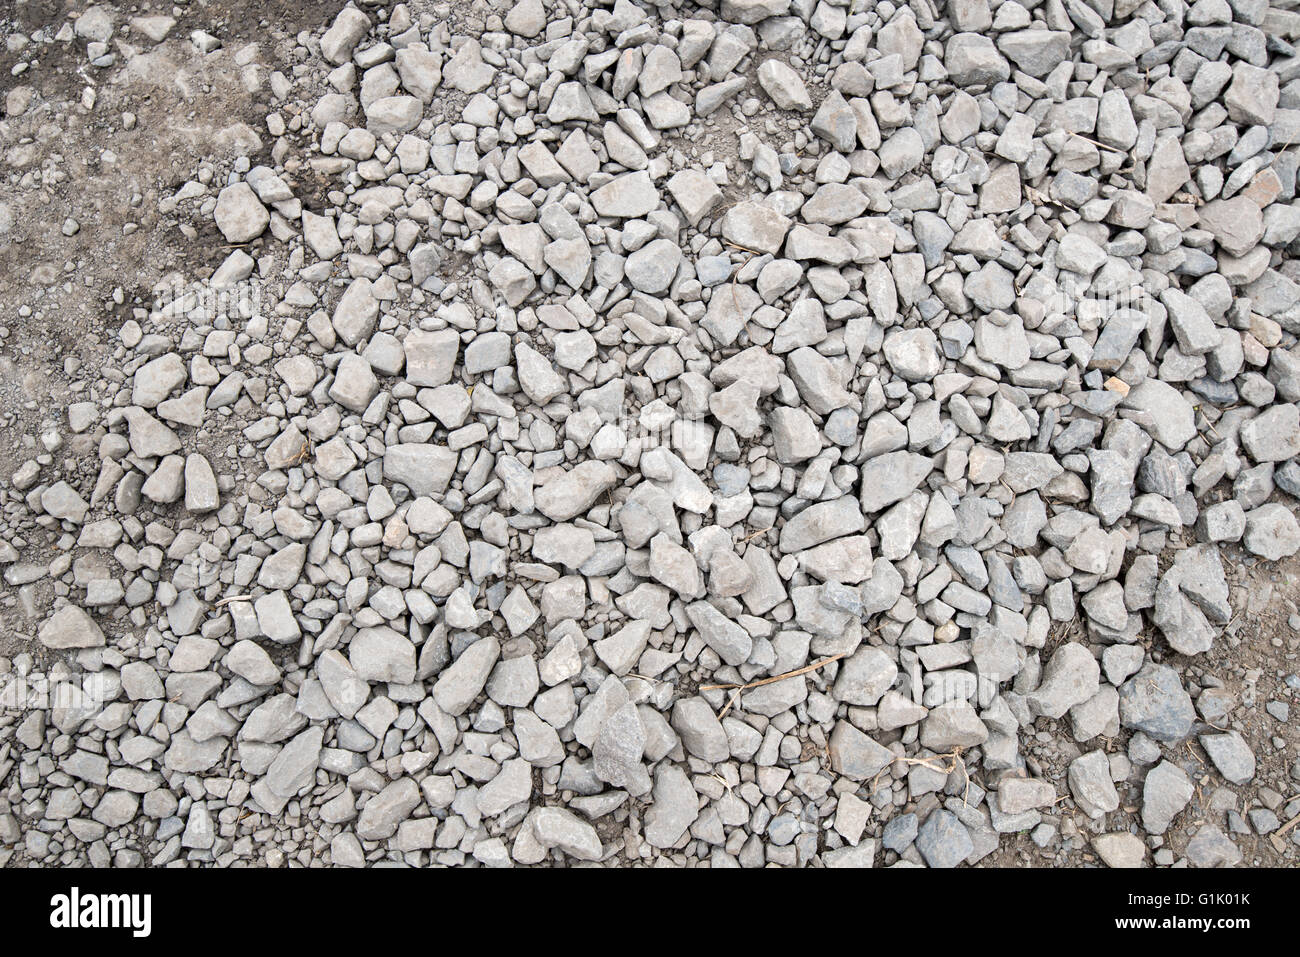 Small dusty rocks on dirt road Stock Photo